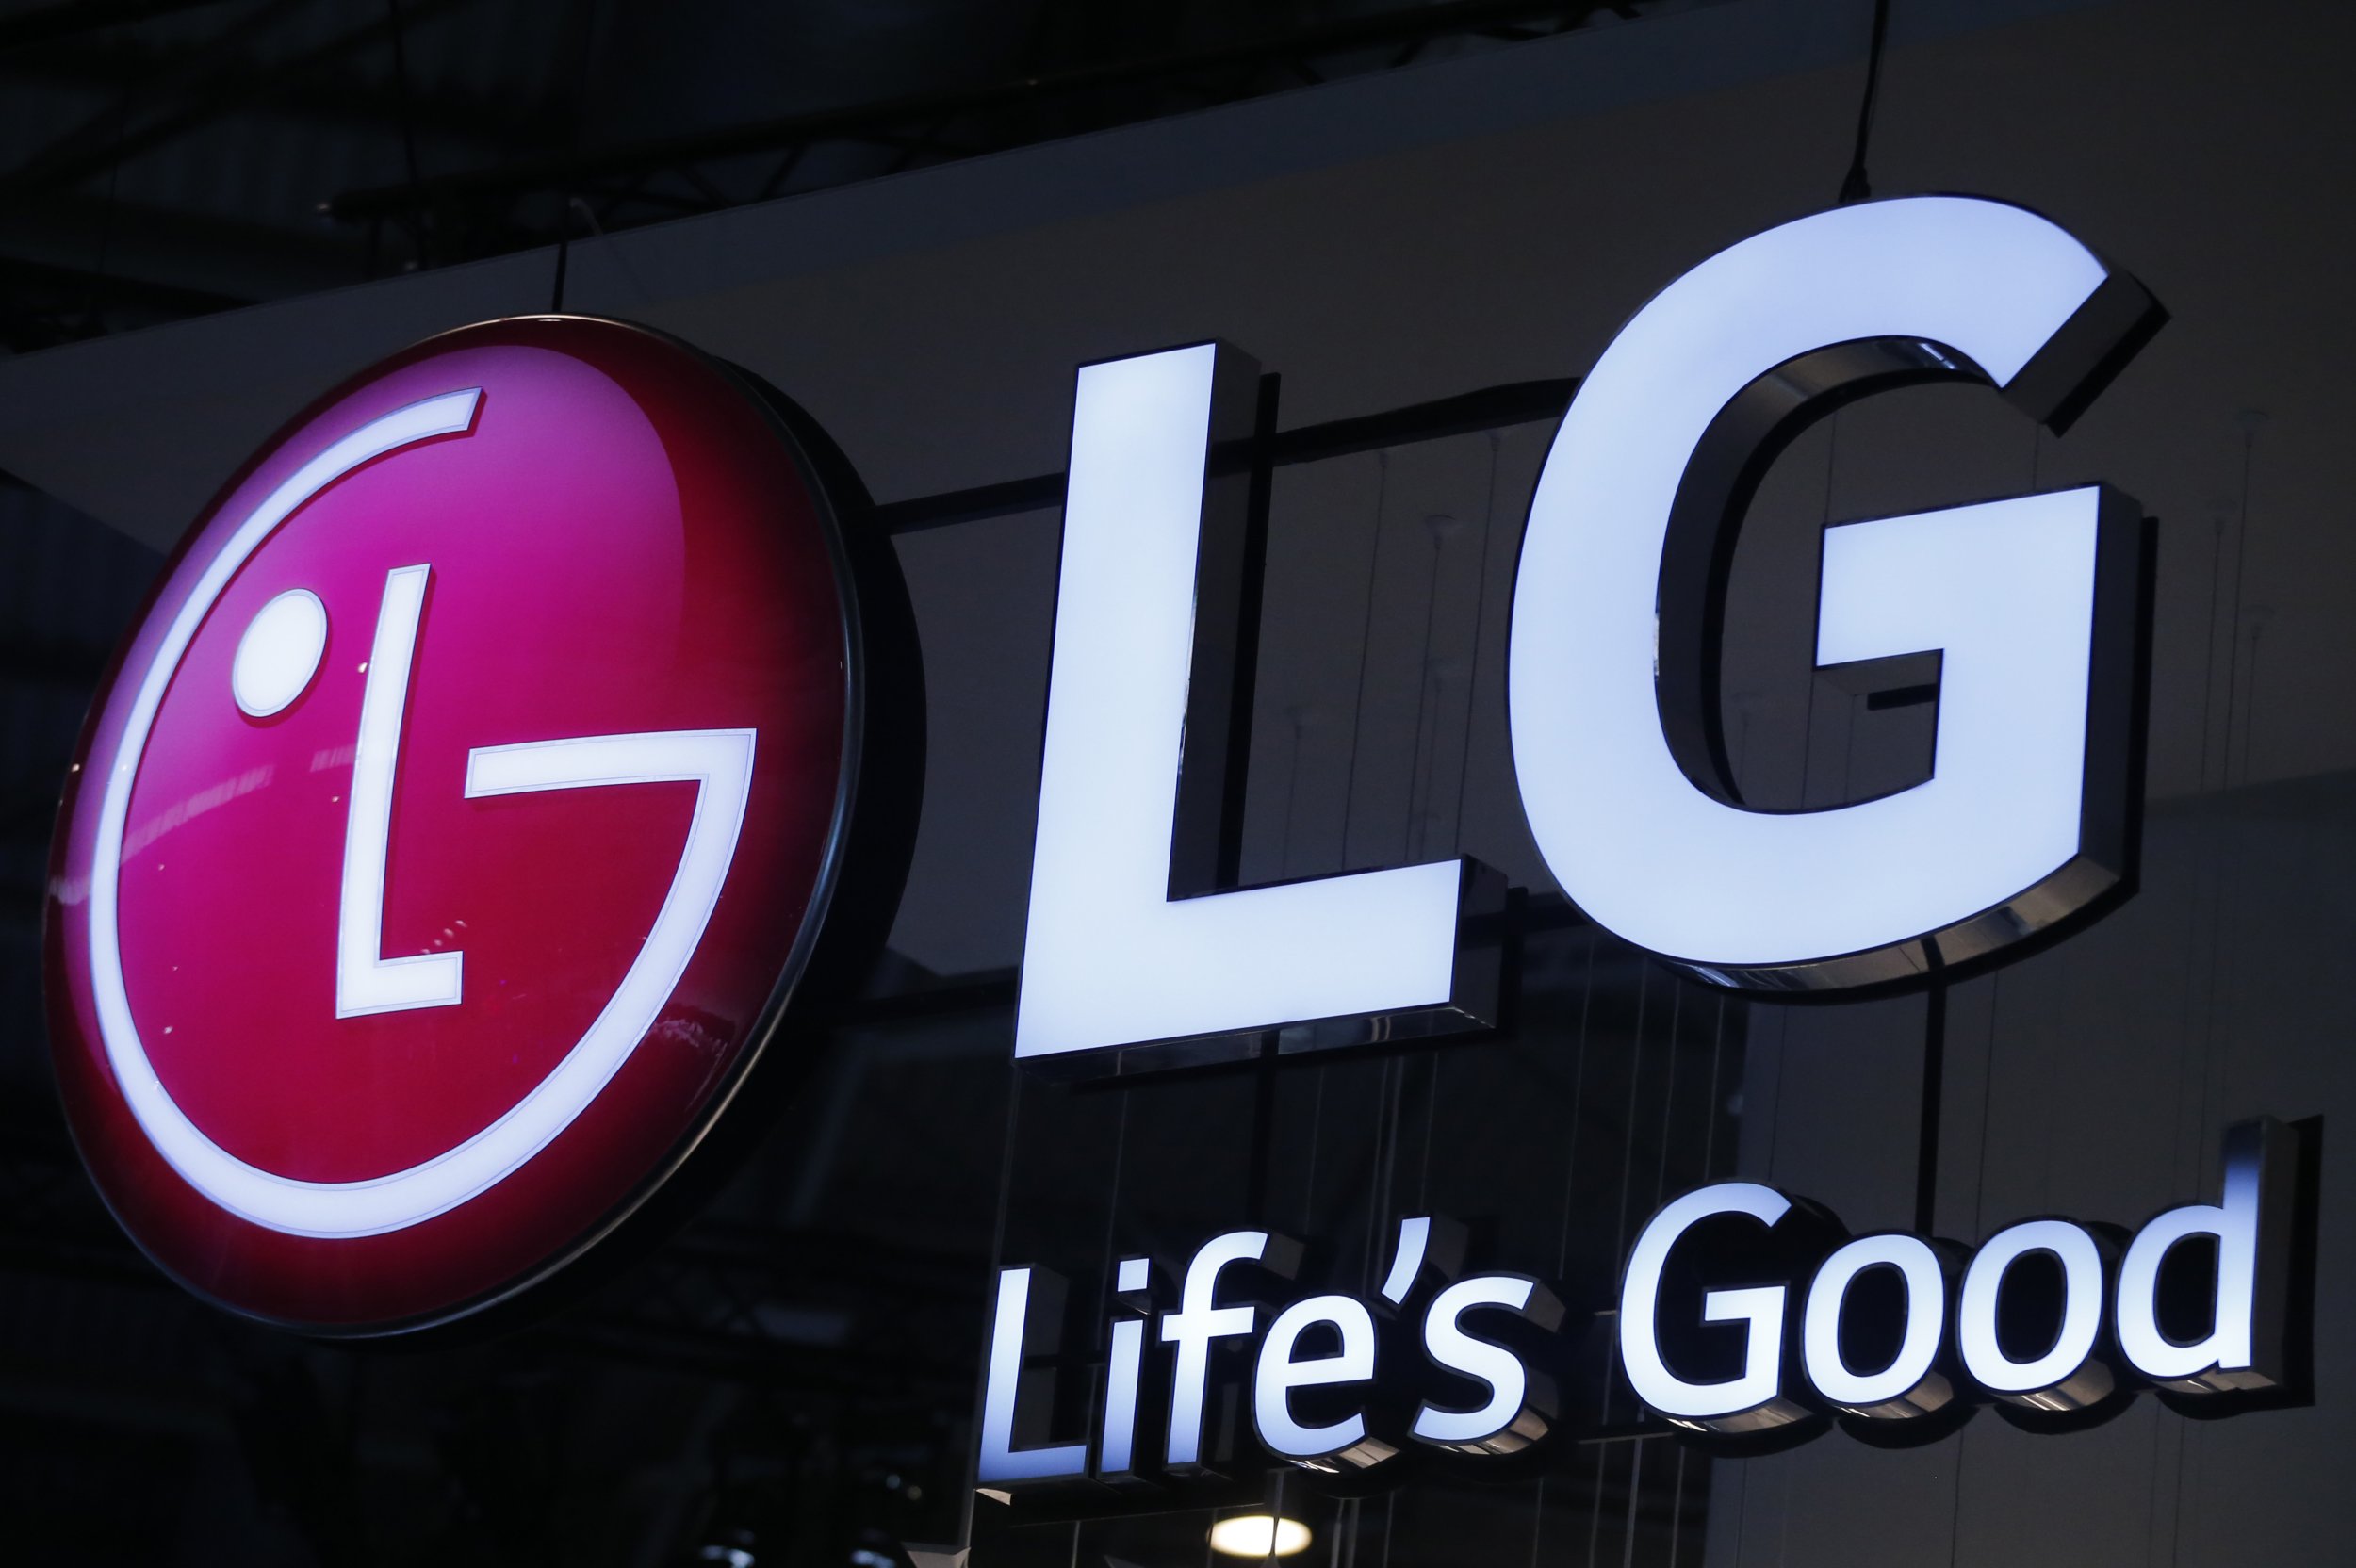 S good ru. LG логотип. LG Life s good логотип. LG Life's good телевизор. Картинки LG.